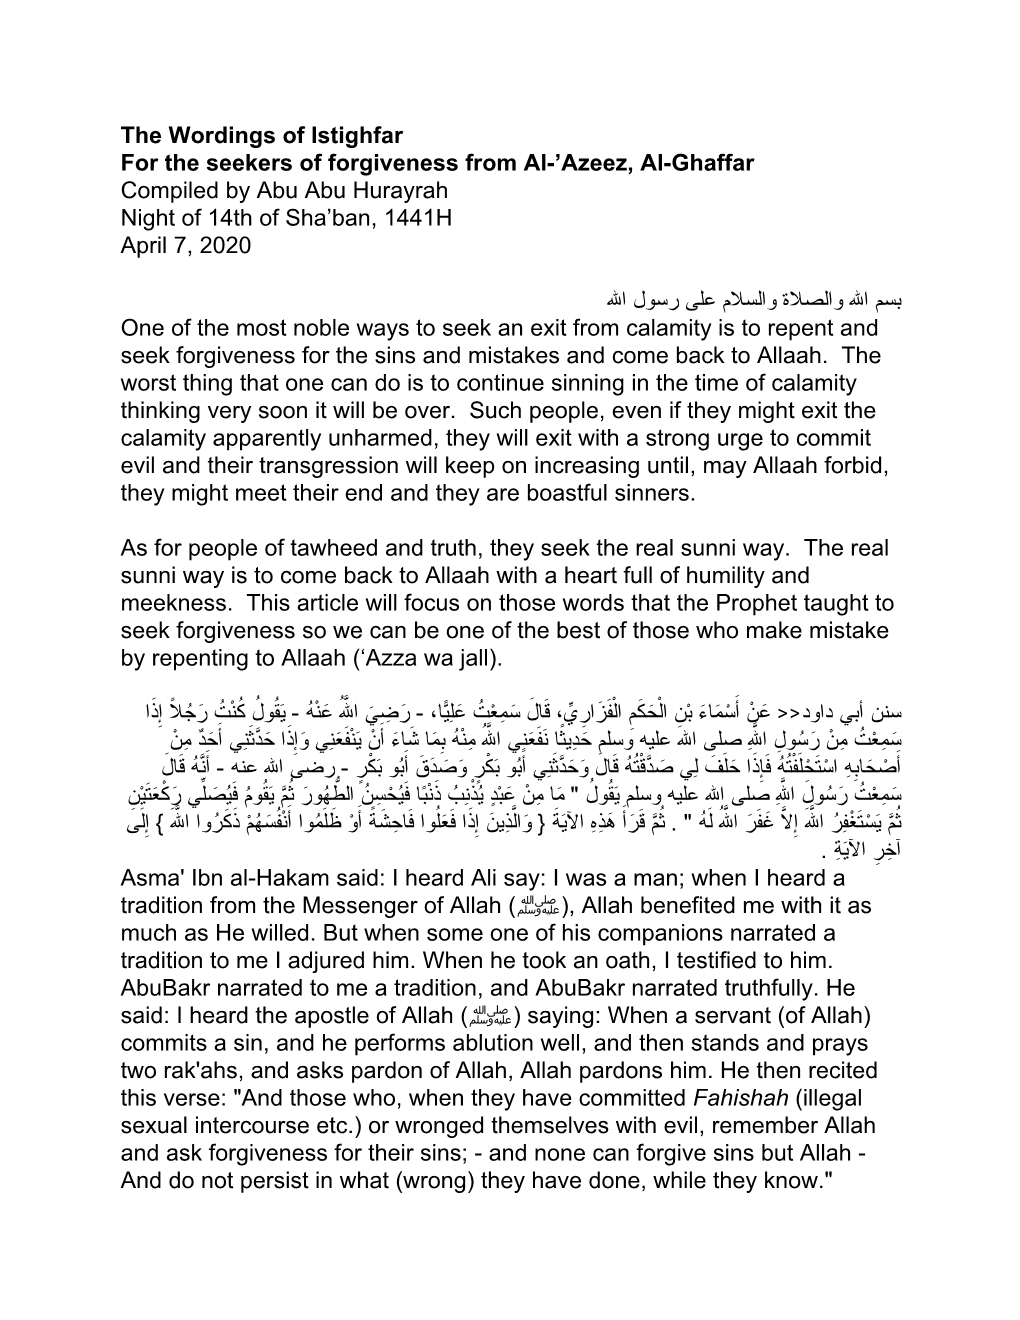 The Wordings of Istighfar for the Seekers of Forgiveness from Al-’Azeez, Al-Ghaffar Compiled by Abu Abu Hurayrah Night of 14Th of Sha’Ban, 1441H April 7, 2020